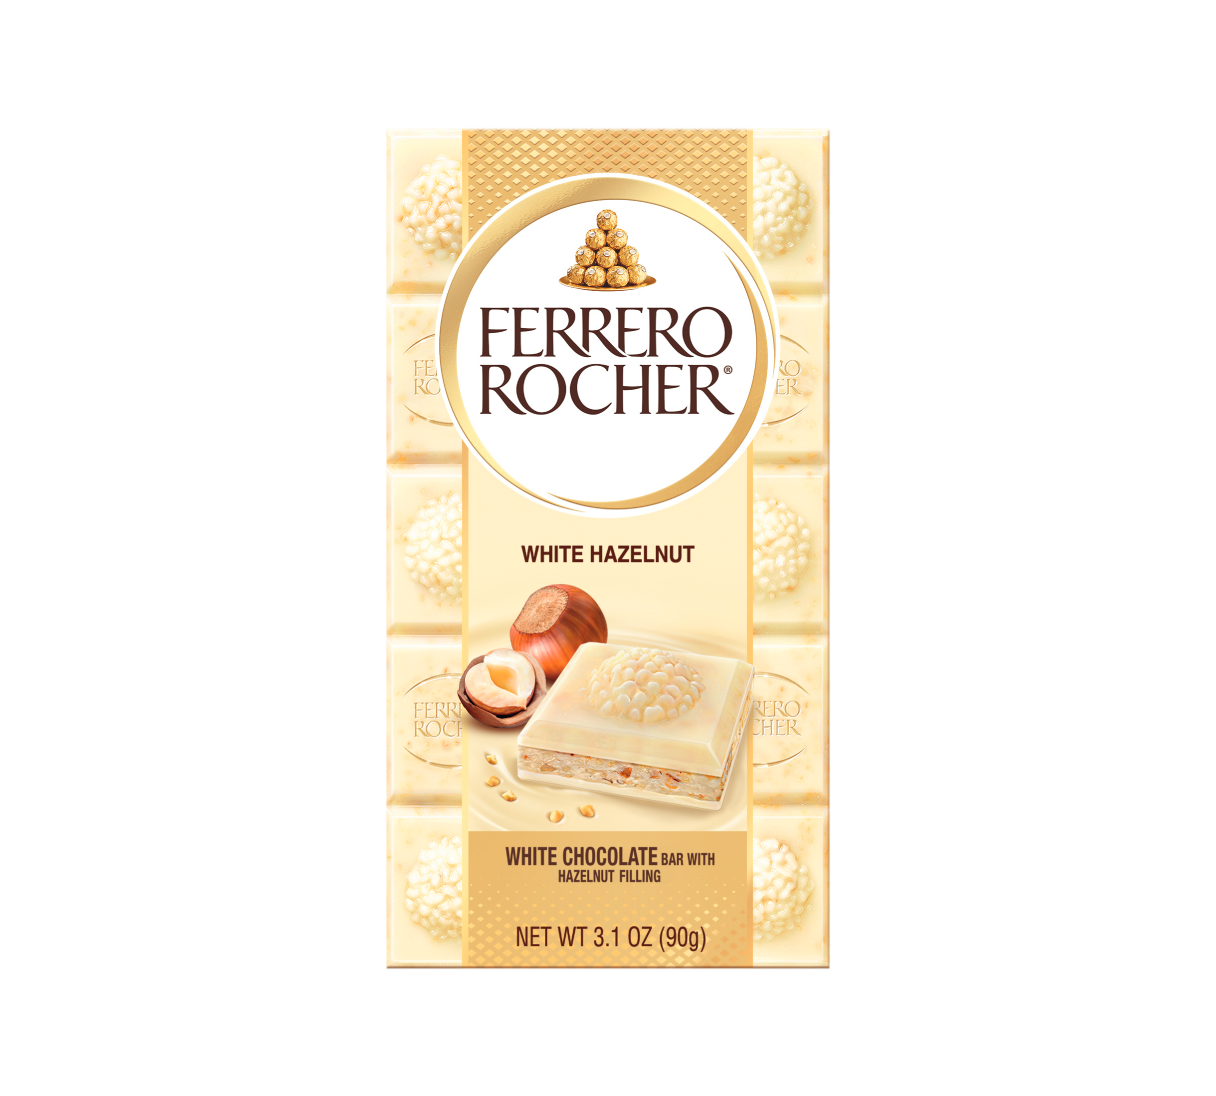 Ferrero Rocher debuts premium chocolate bars